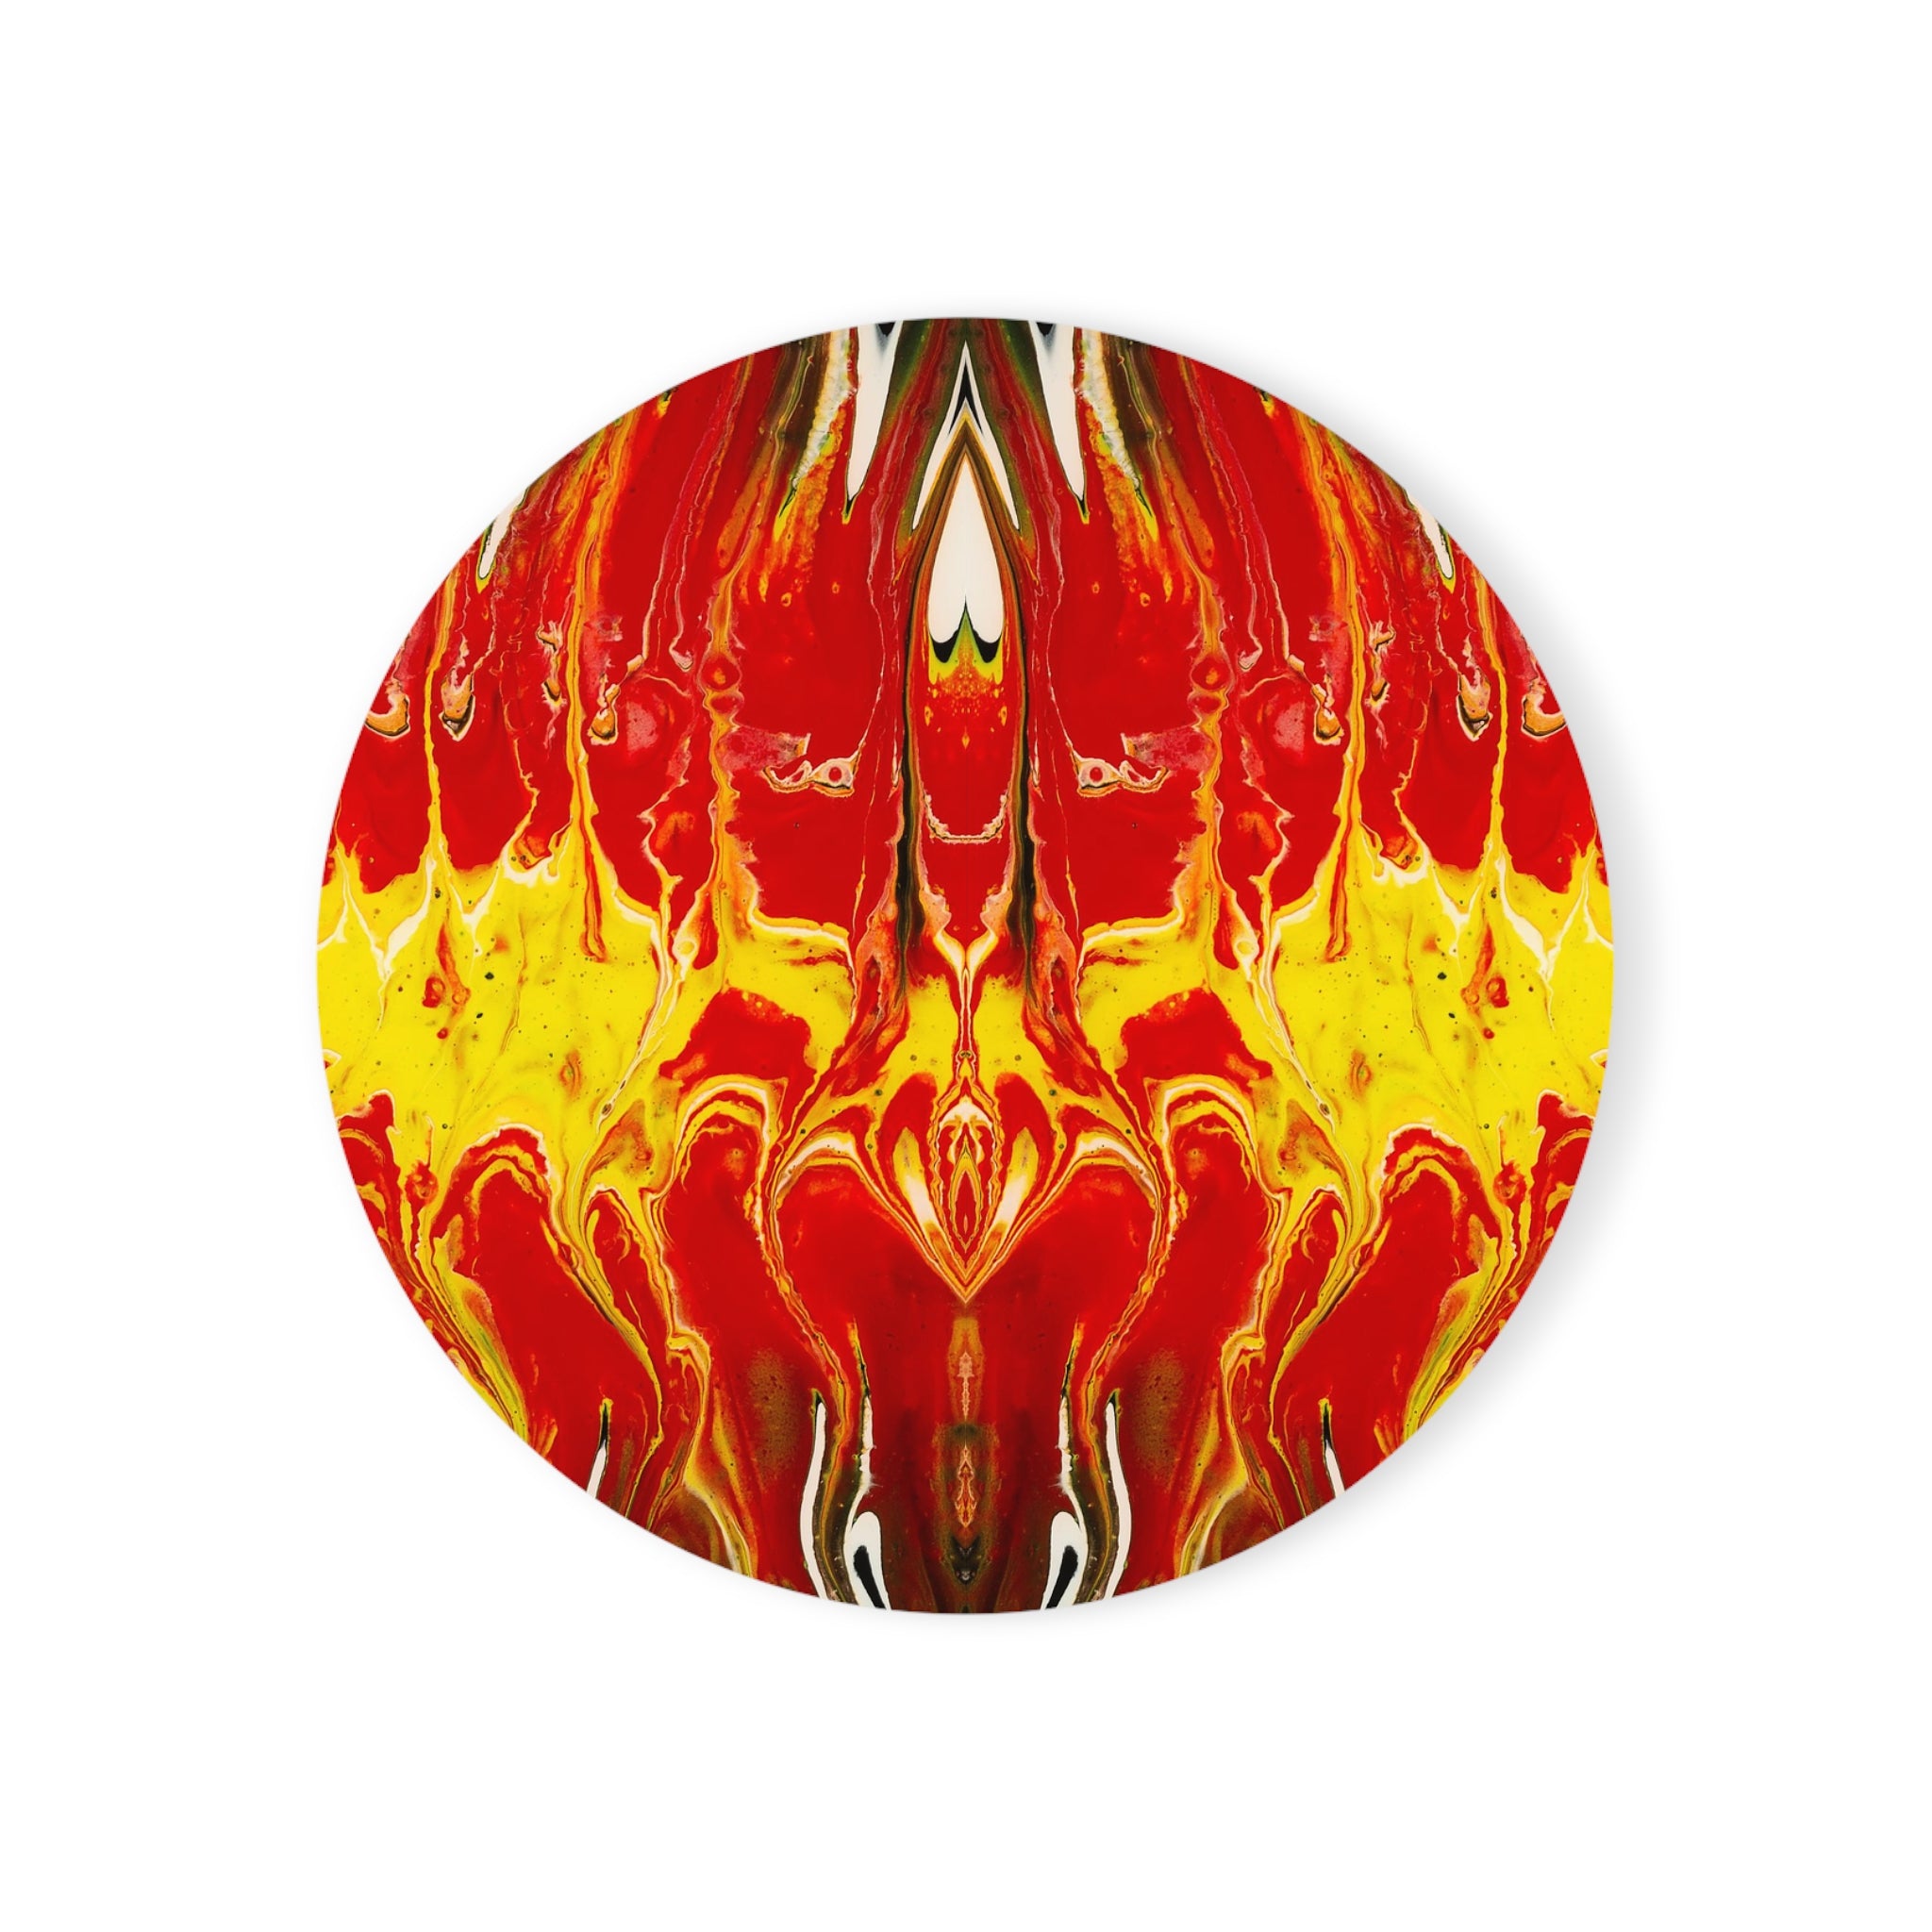 Cameron Creations - Internal Flames - Stylish Coffee Coaster - Circle Front